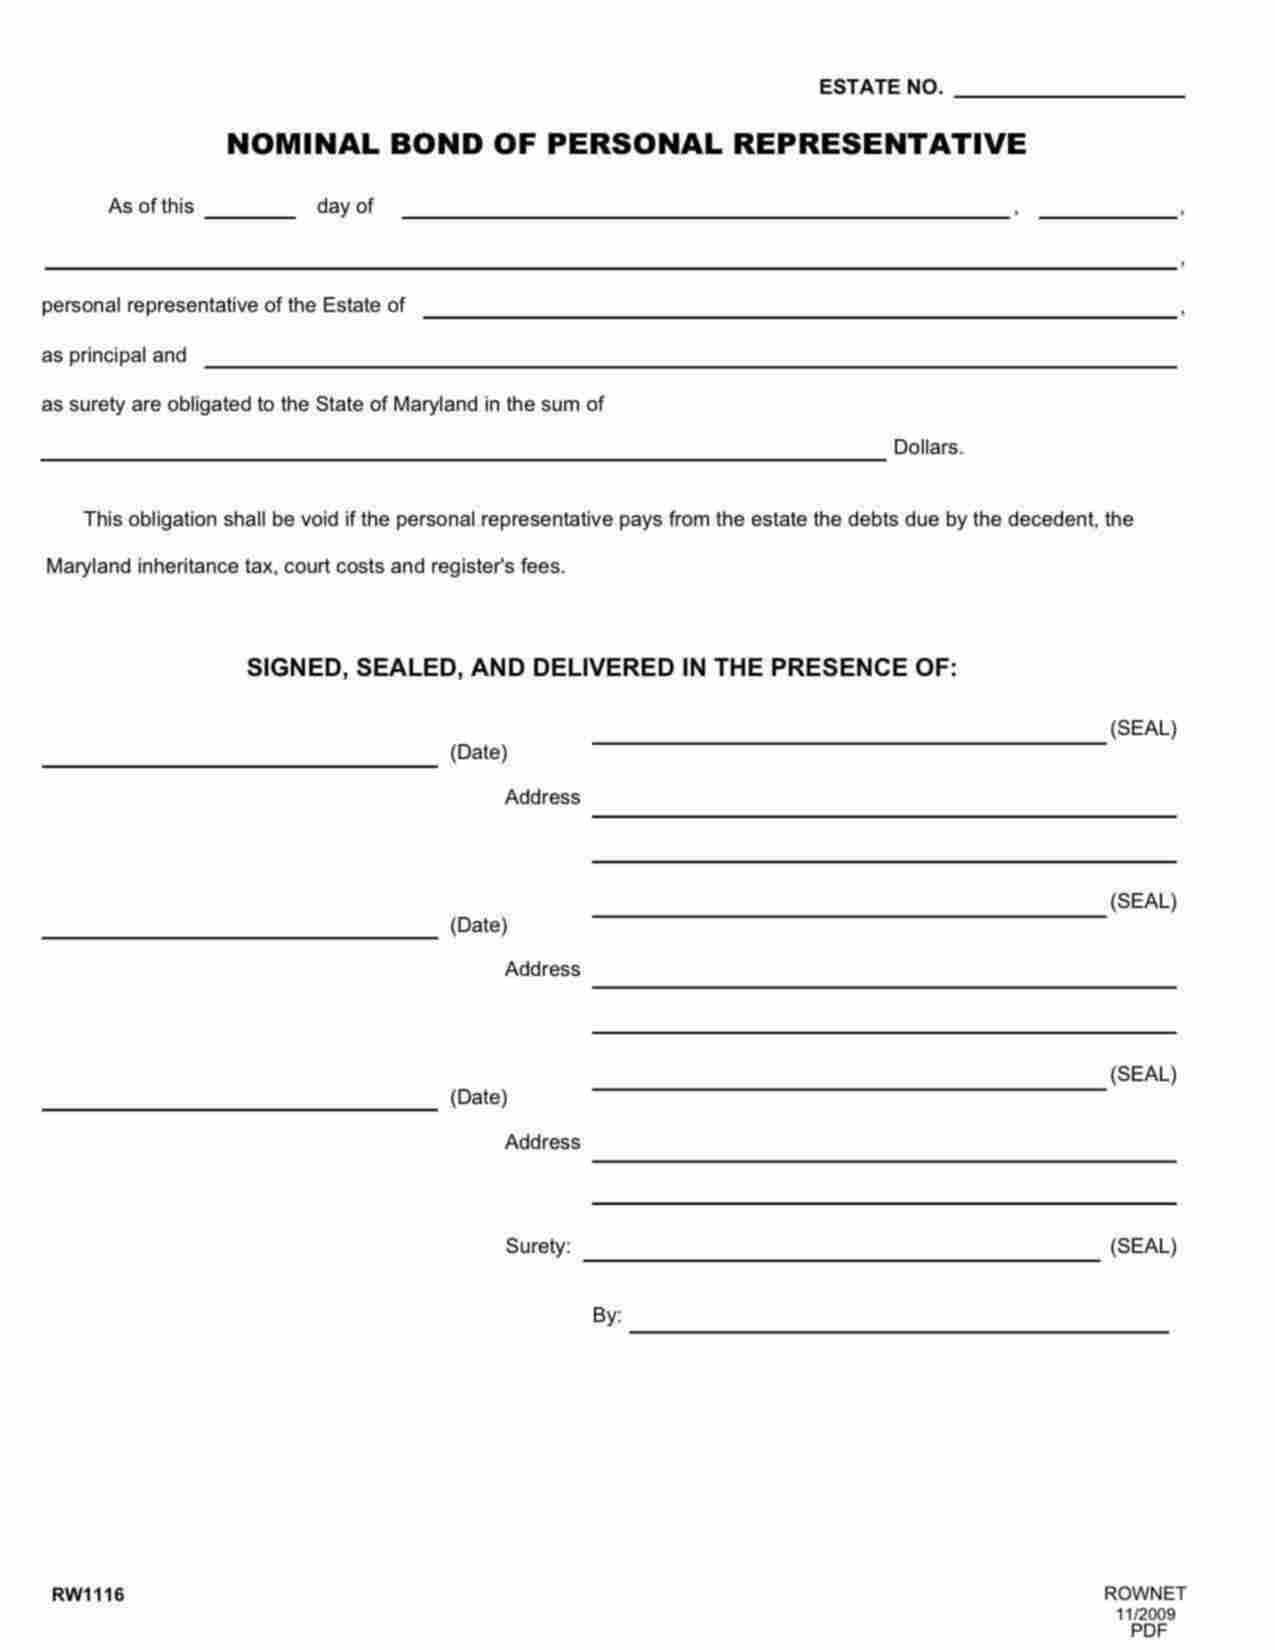 Maryland Personal Representative (Nominal) Bond Form